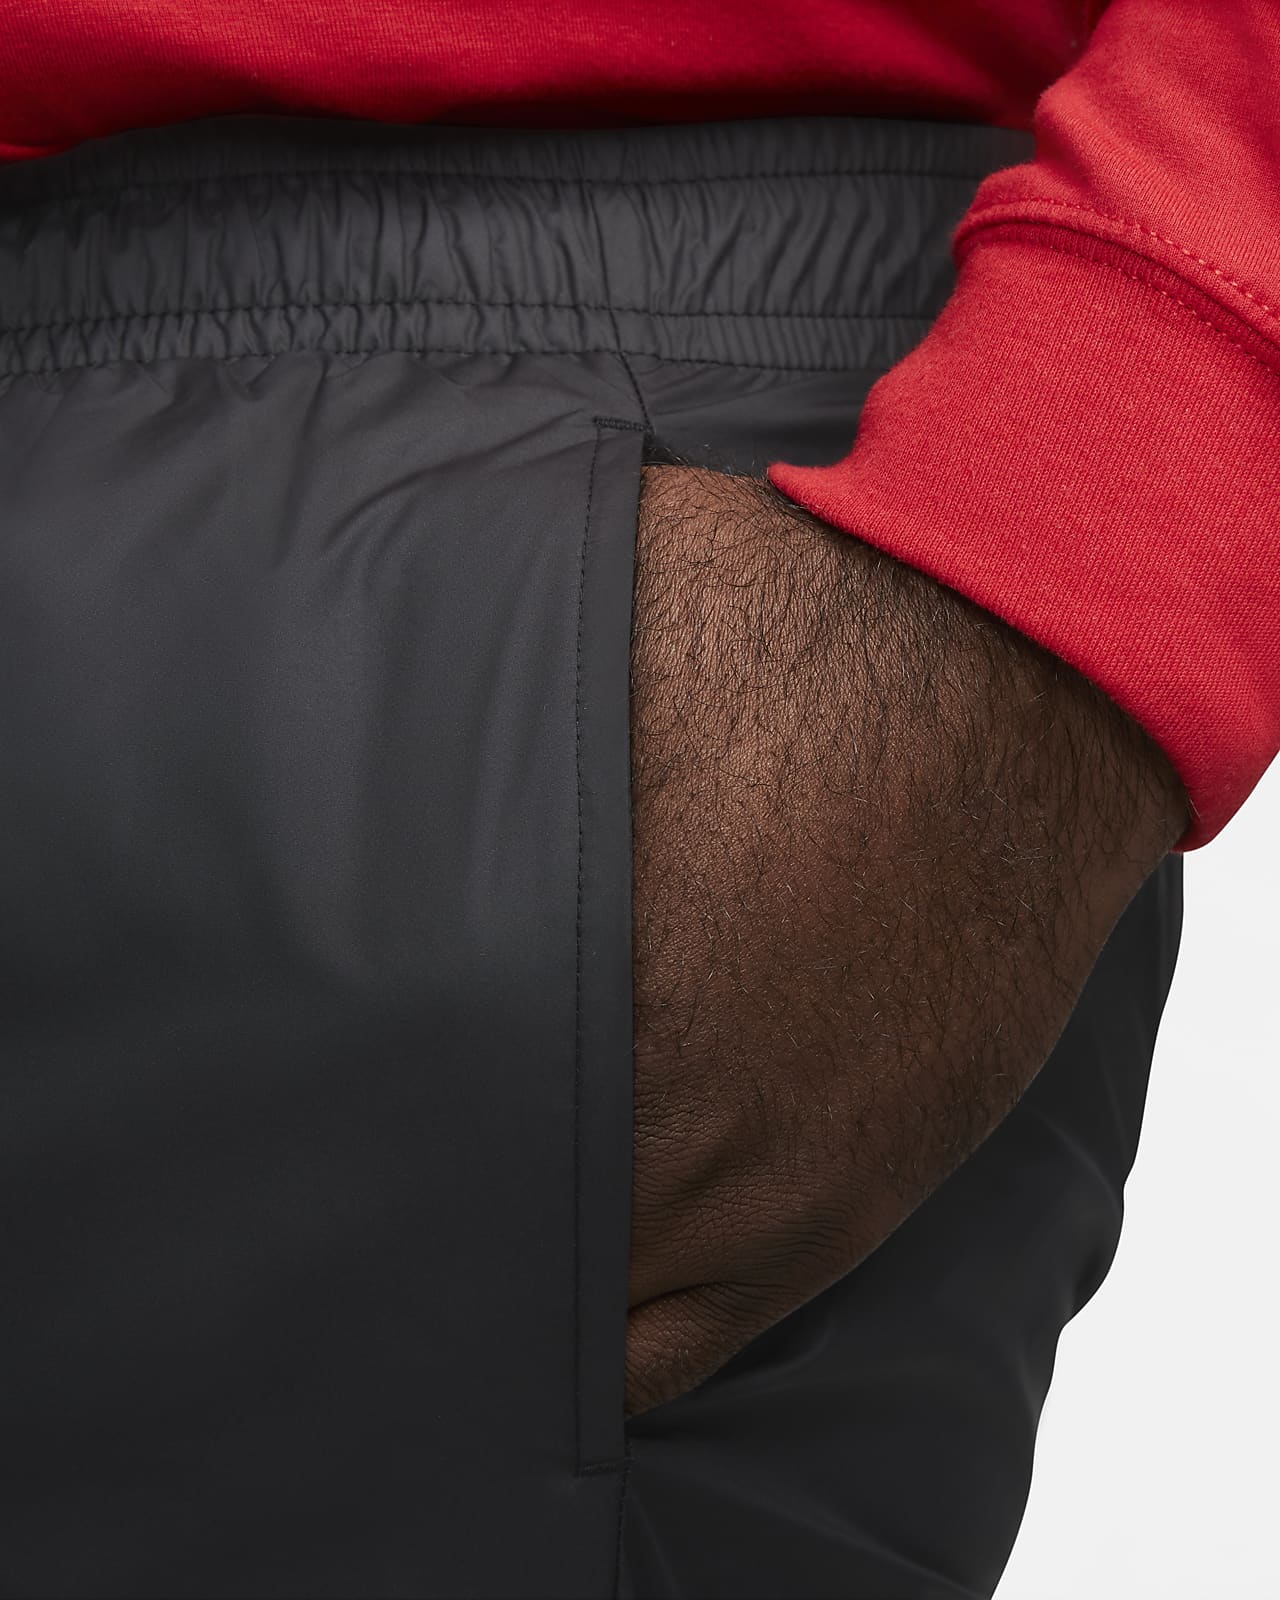 Nike Ultralight Woven Pants